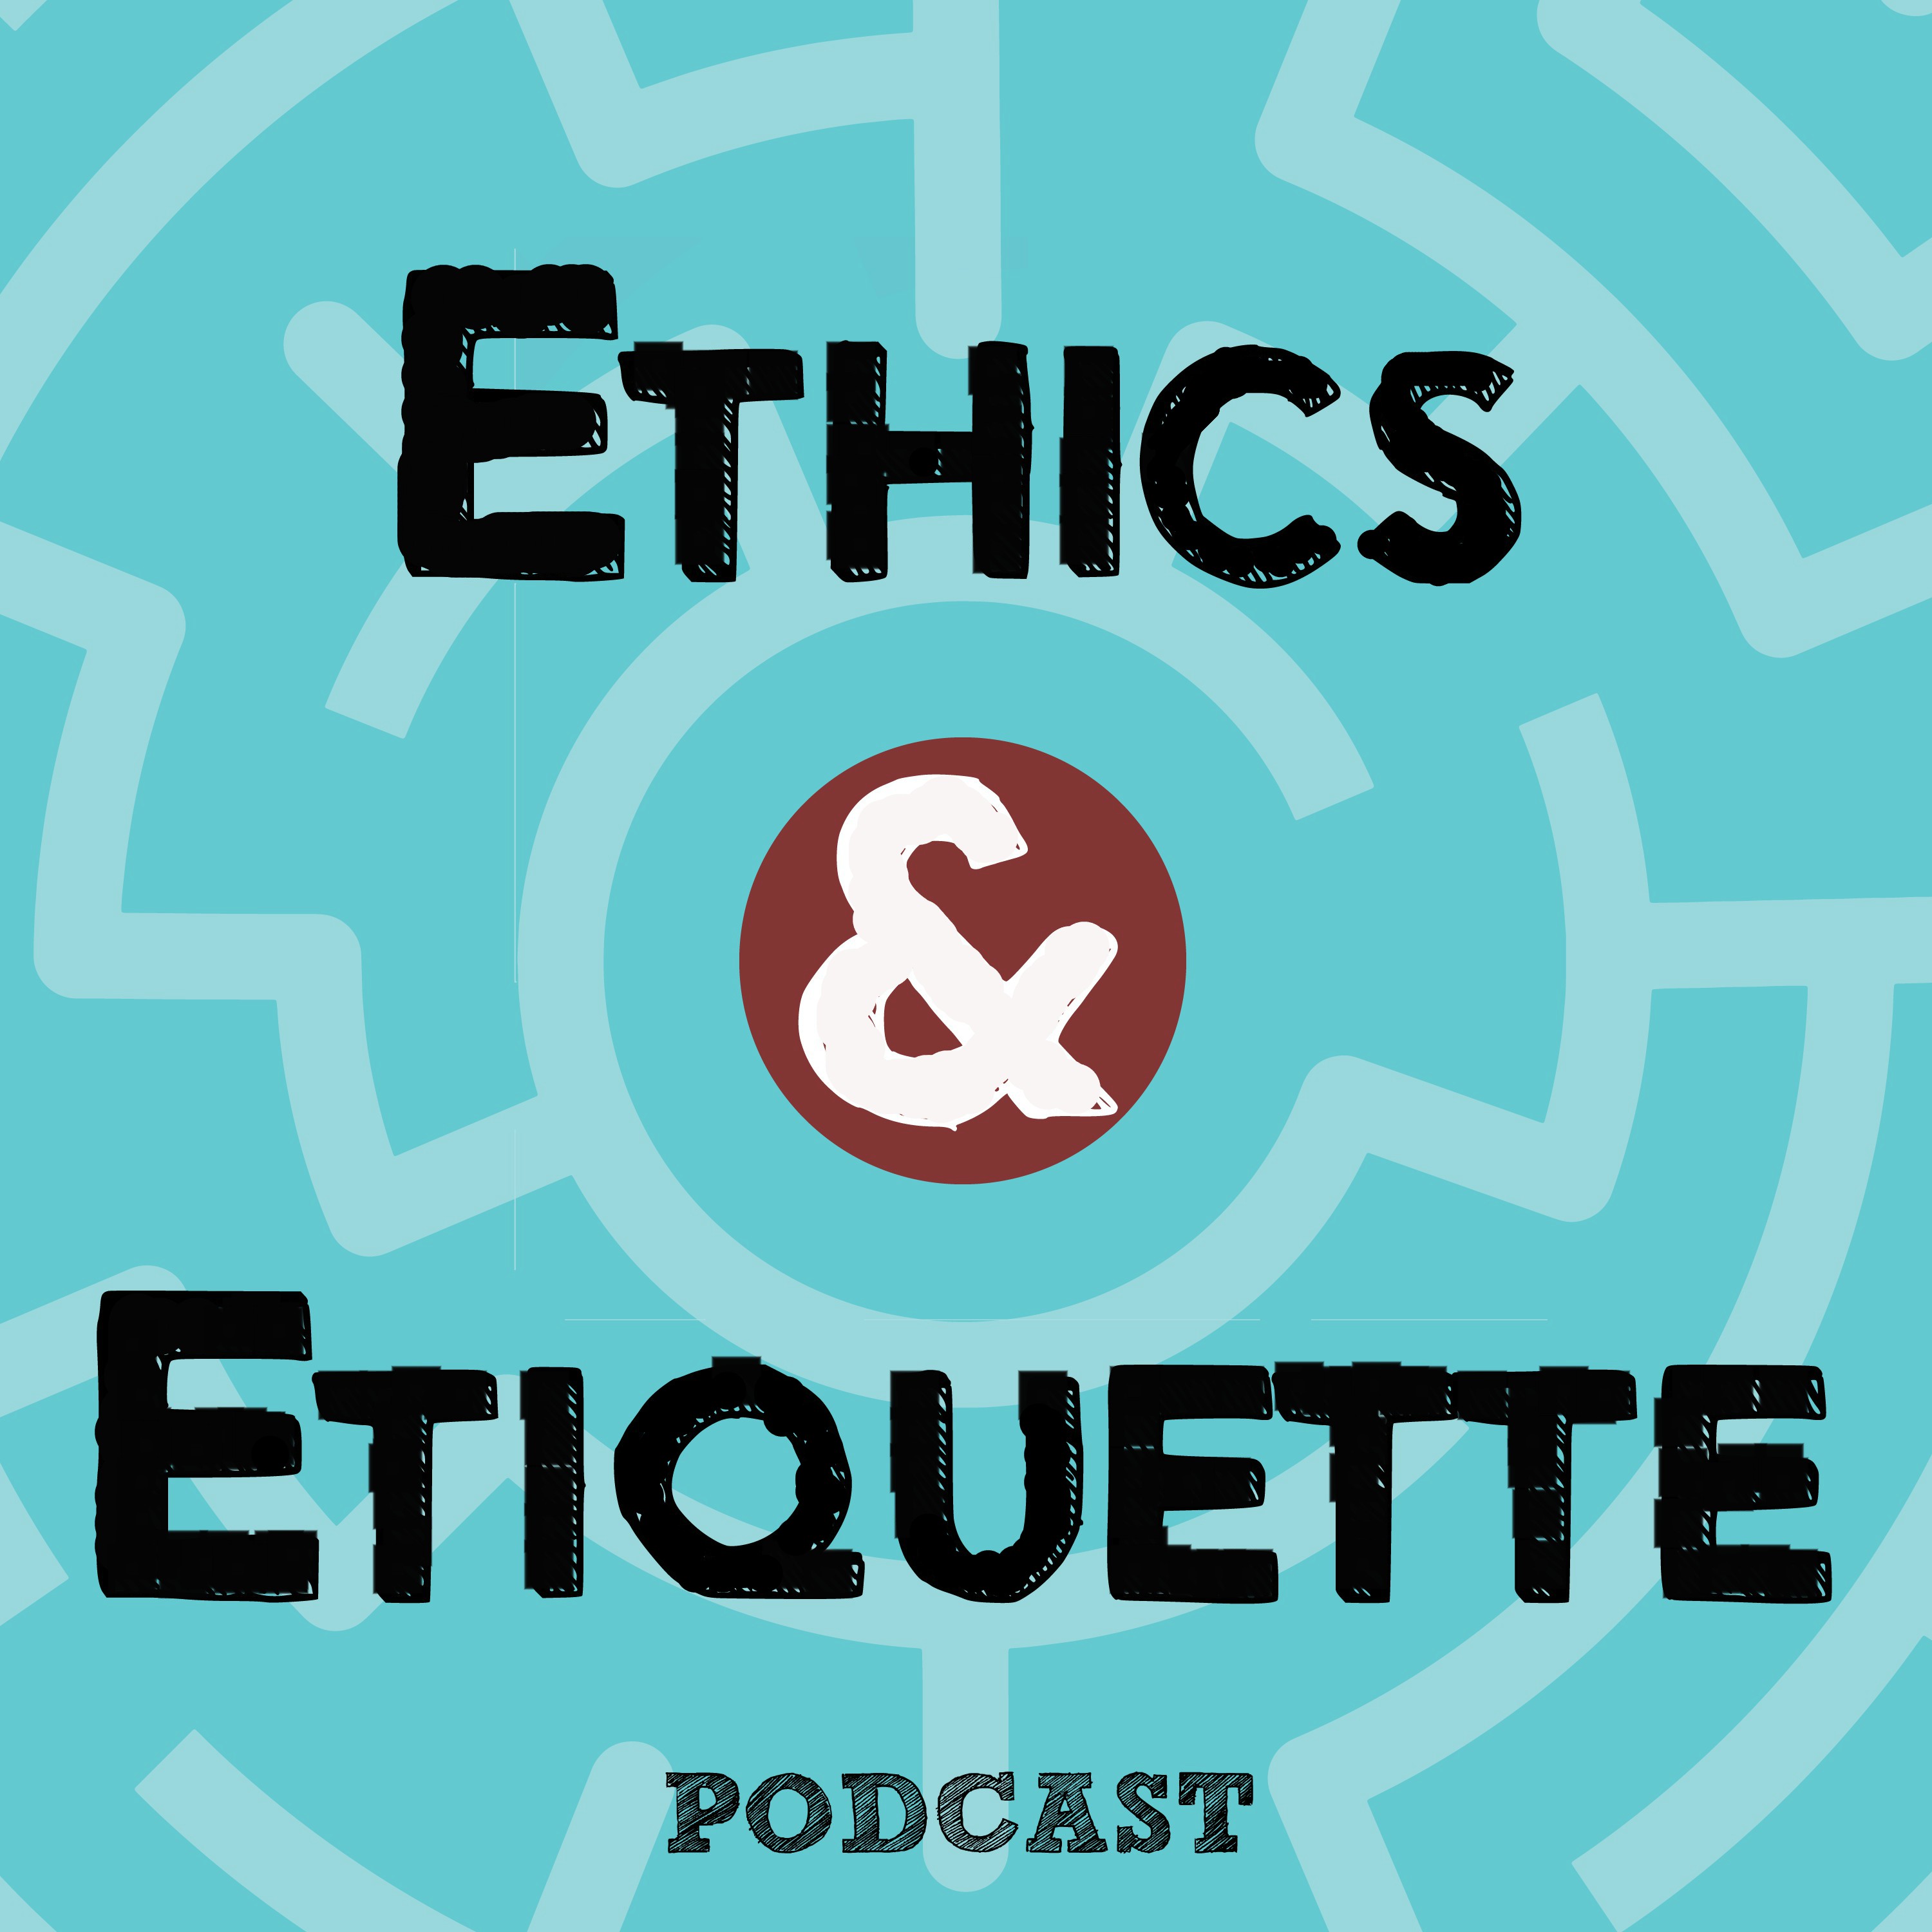 Ethics and Etiquette